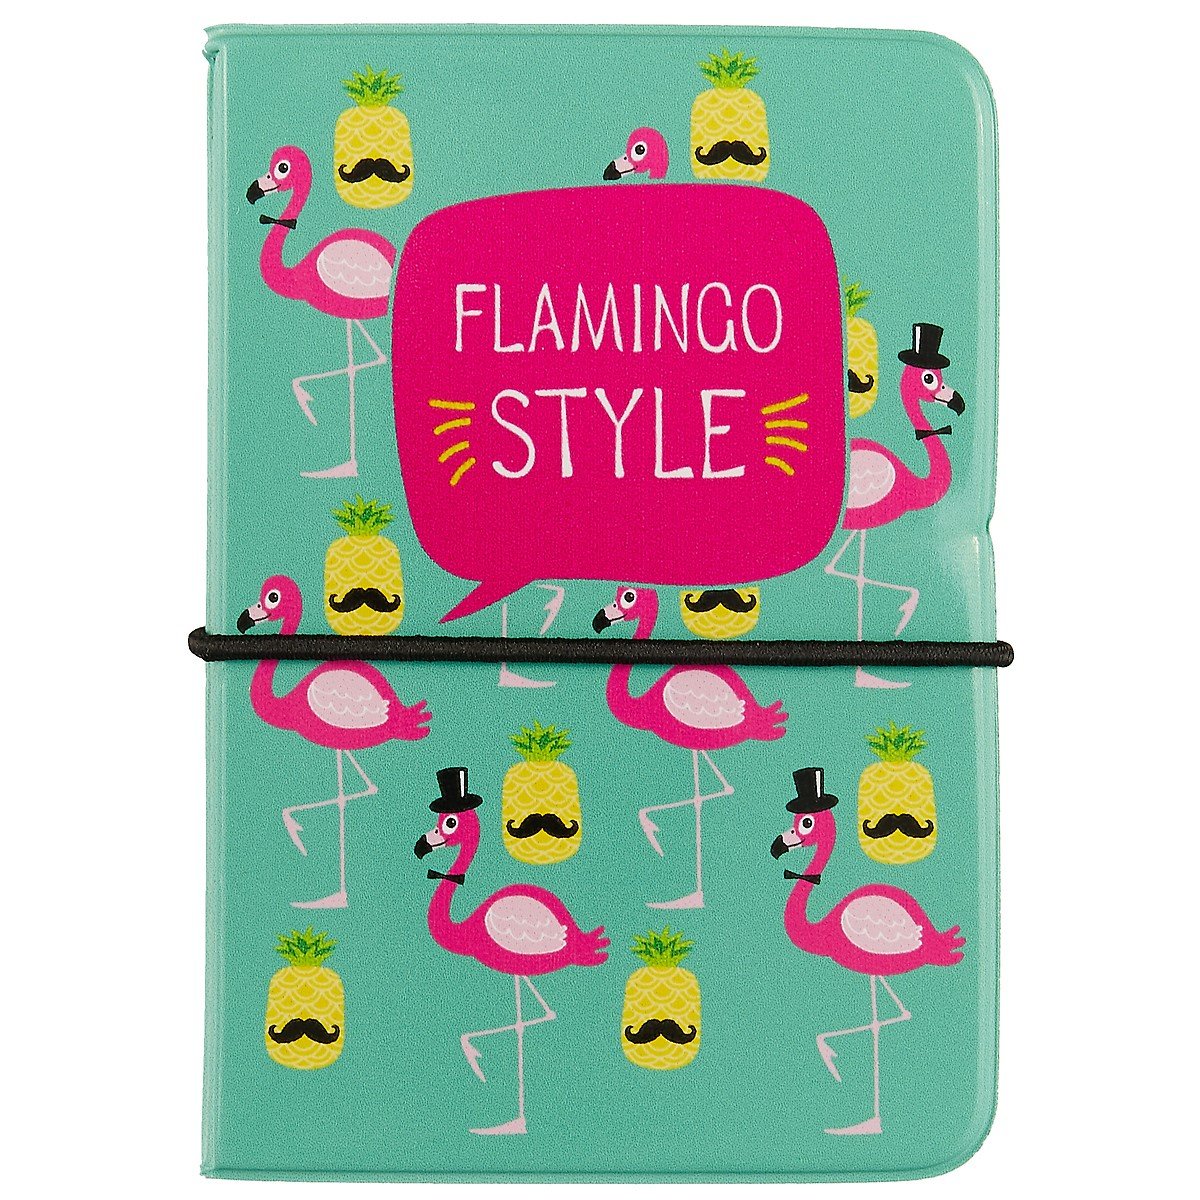   Flamingo style , 10 